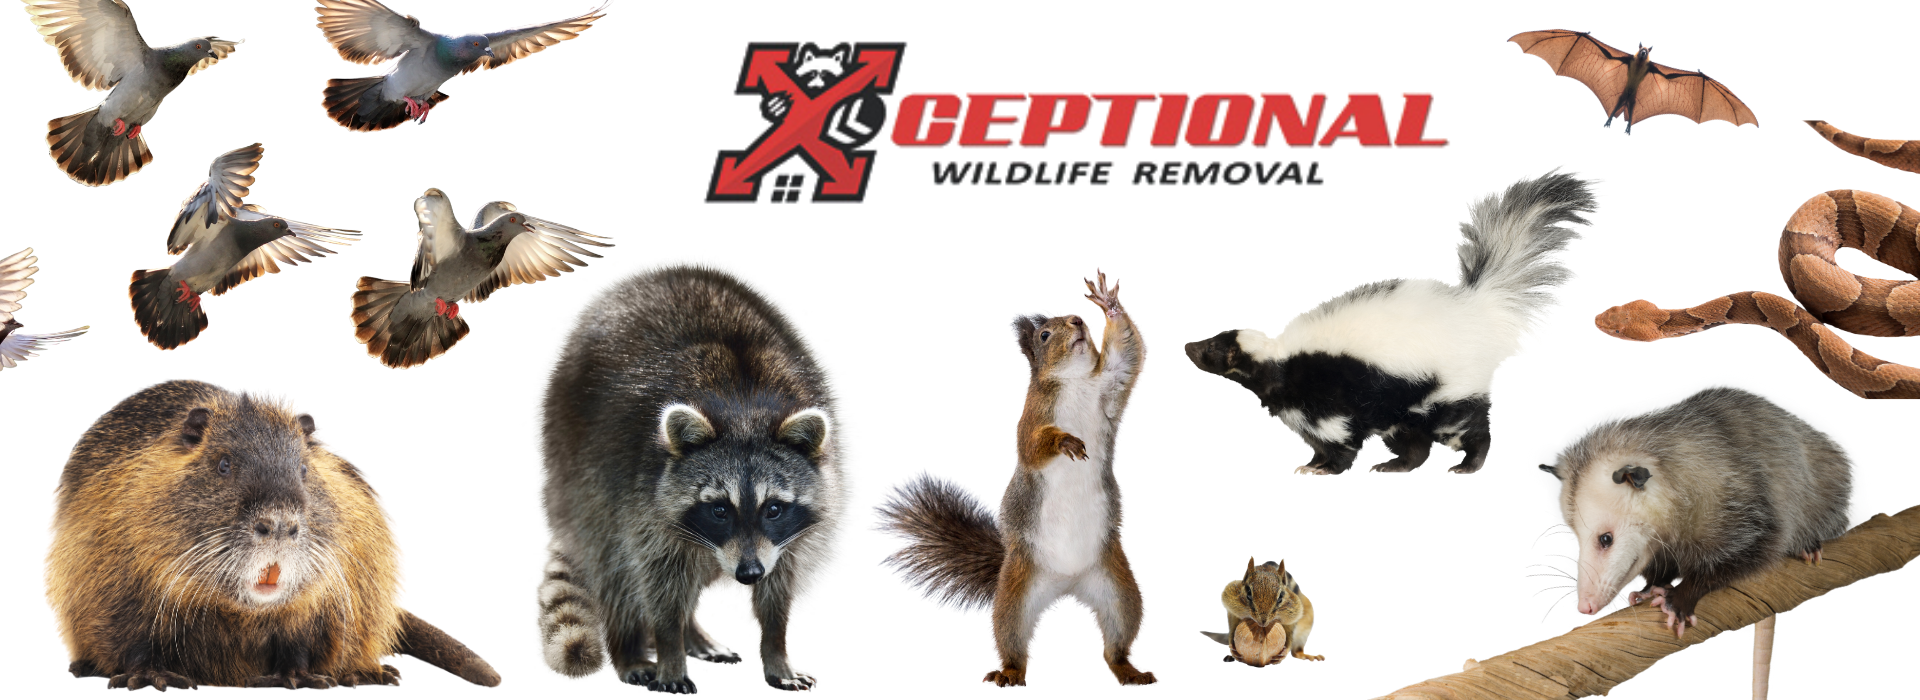 animal removal service wildlife removal company wildlife control services U.S. Wildlife Removal Service US Wildlife Removal